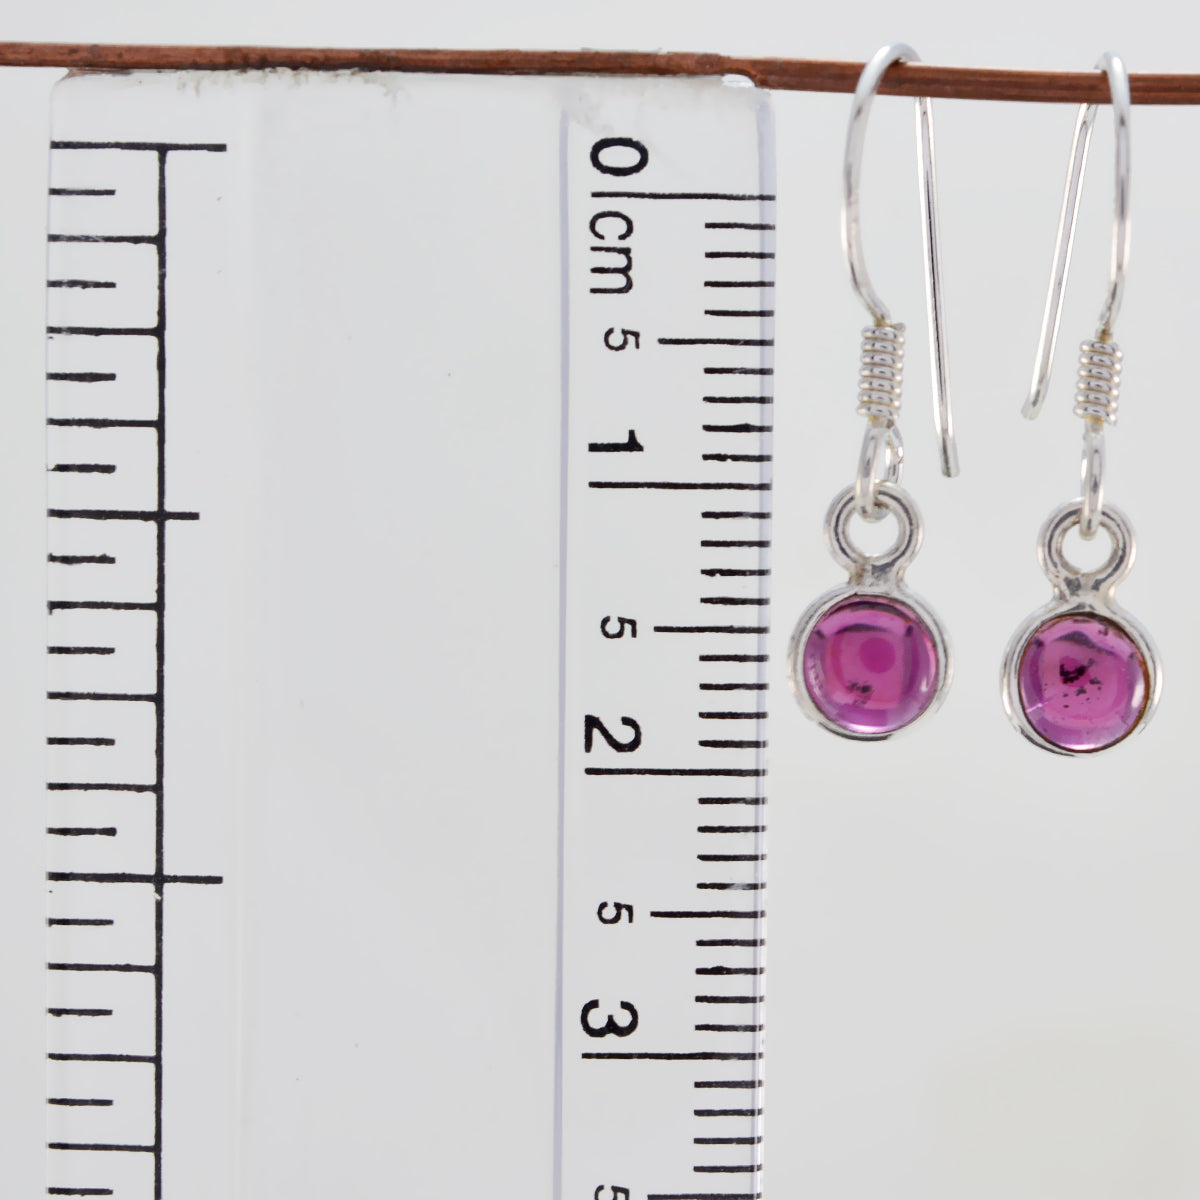 Riyo Good Gemstones round Cabochon Red Garnet Silver Earring gift for friends